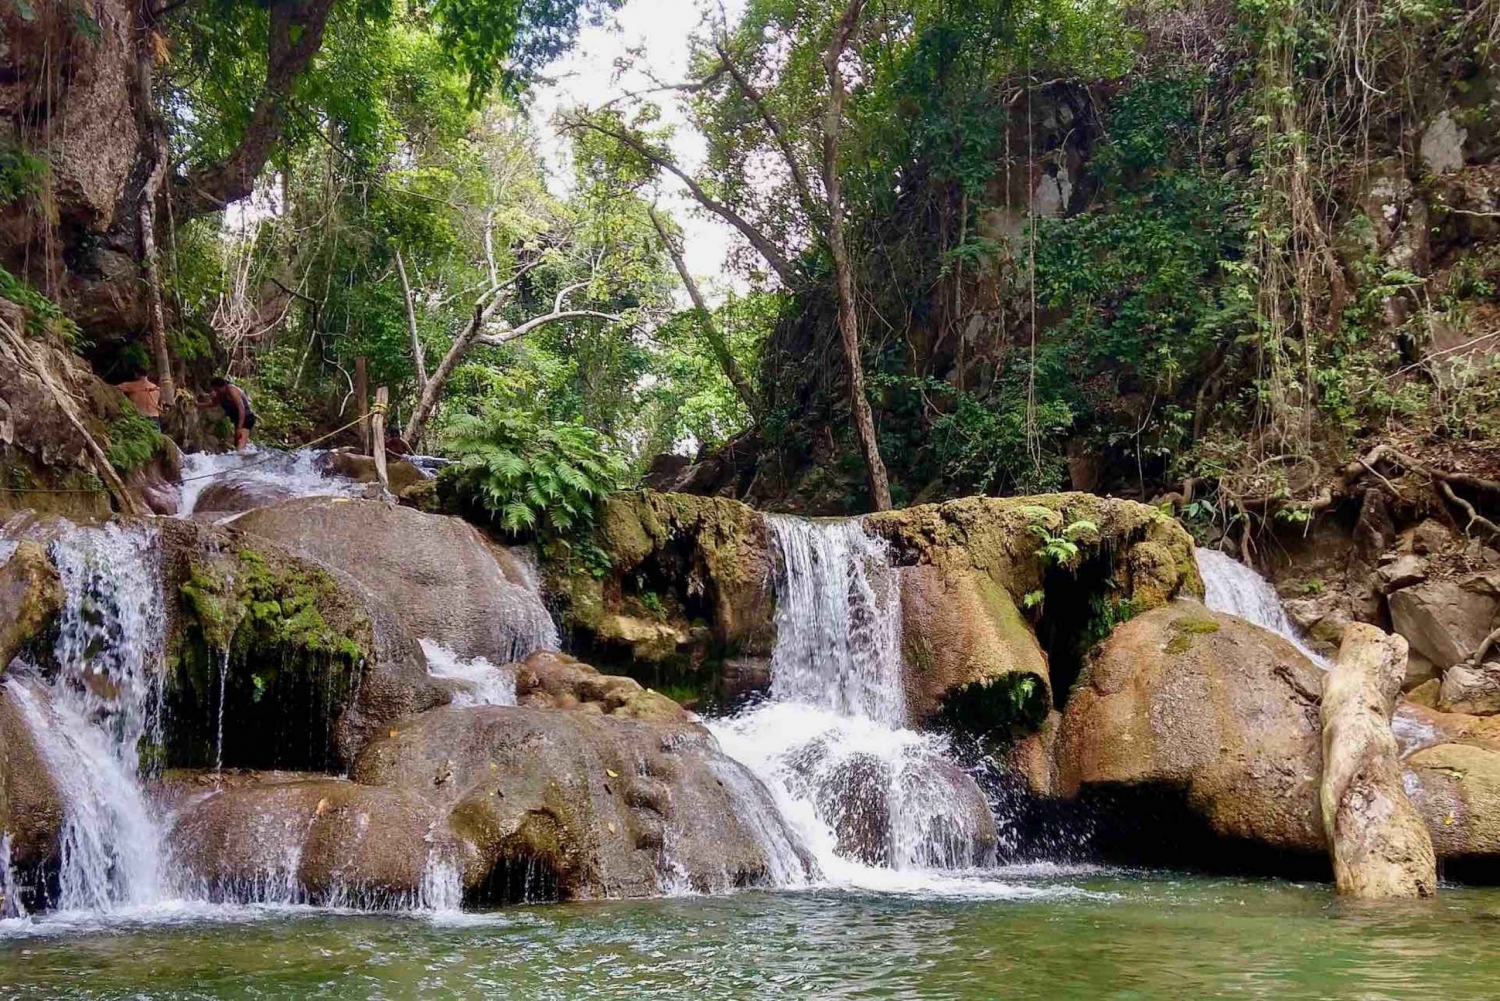 From Huatulco: Magic Huatulco Waterfalls Tour